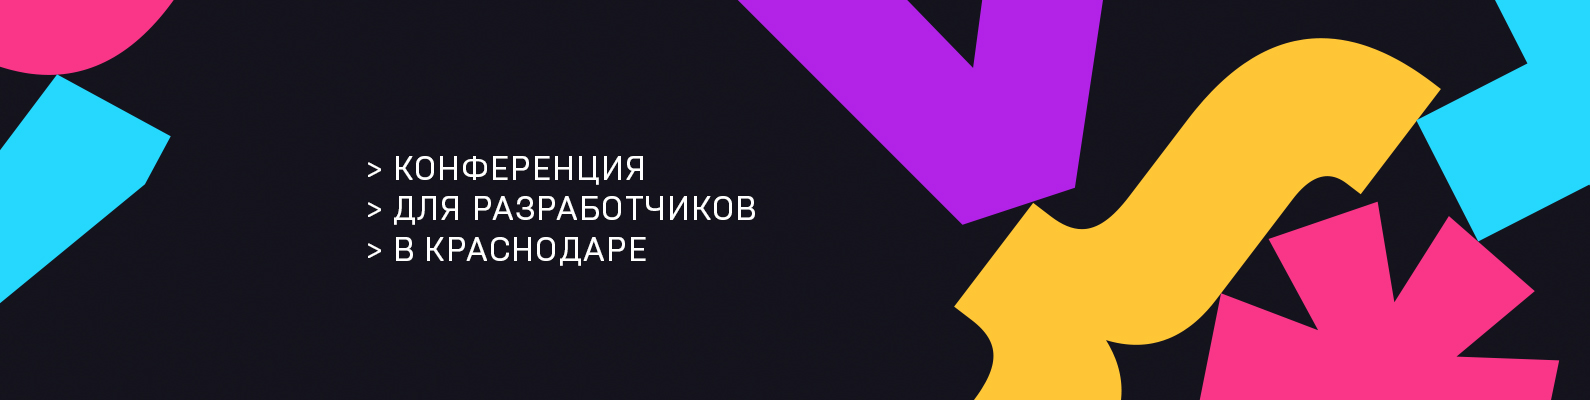 Krasnodar Dev Conf 2019